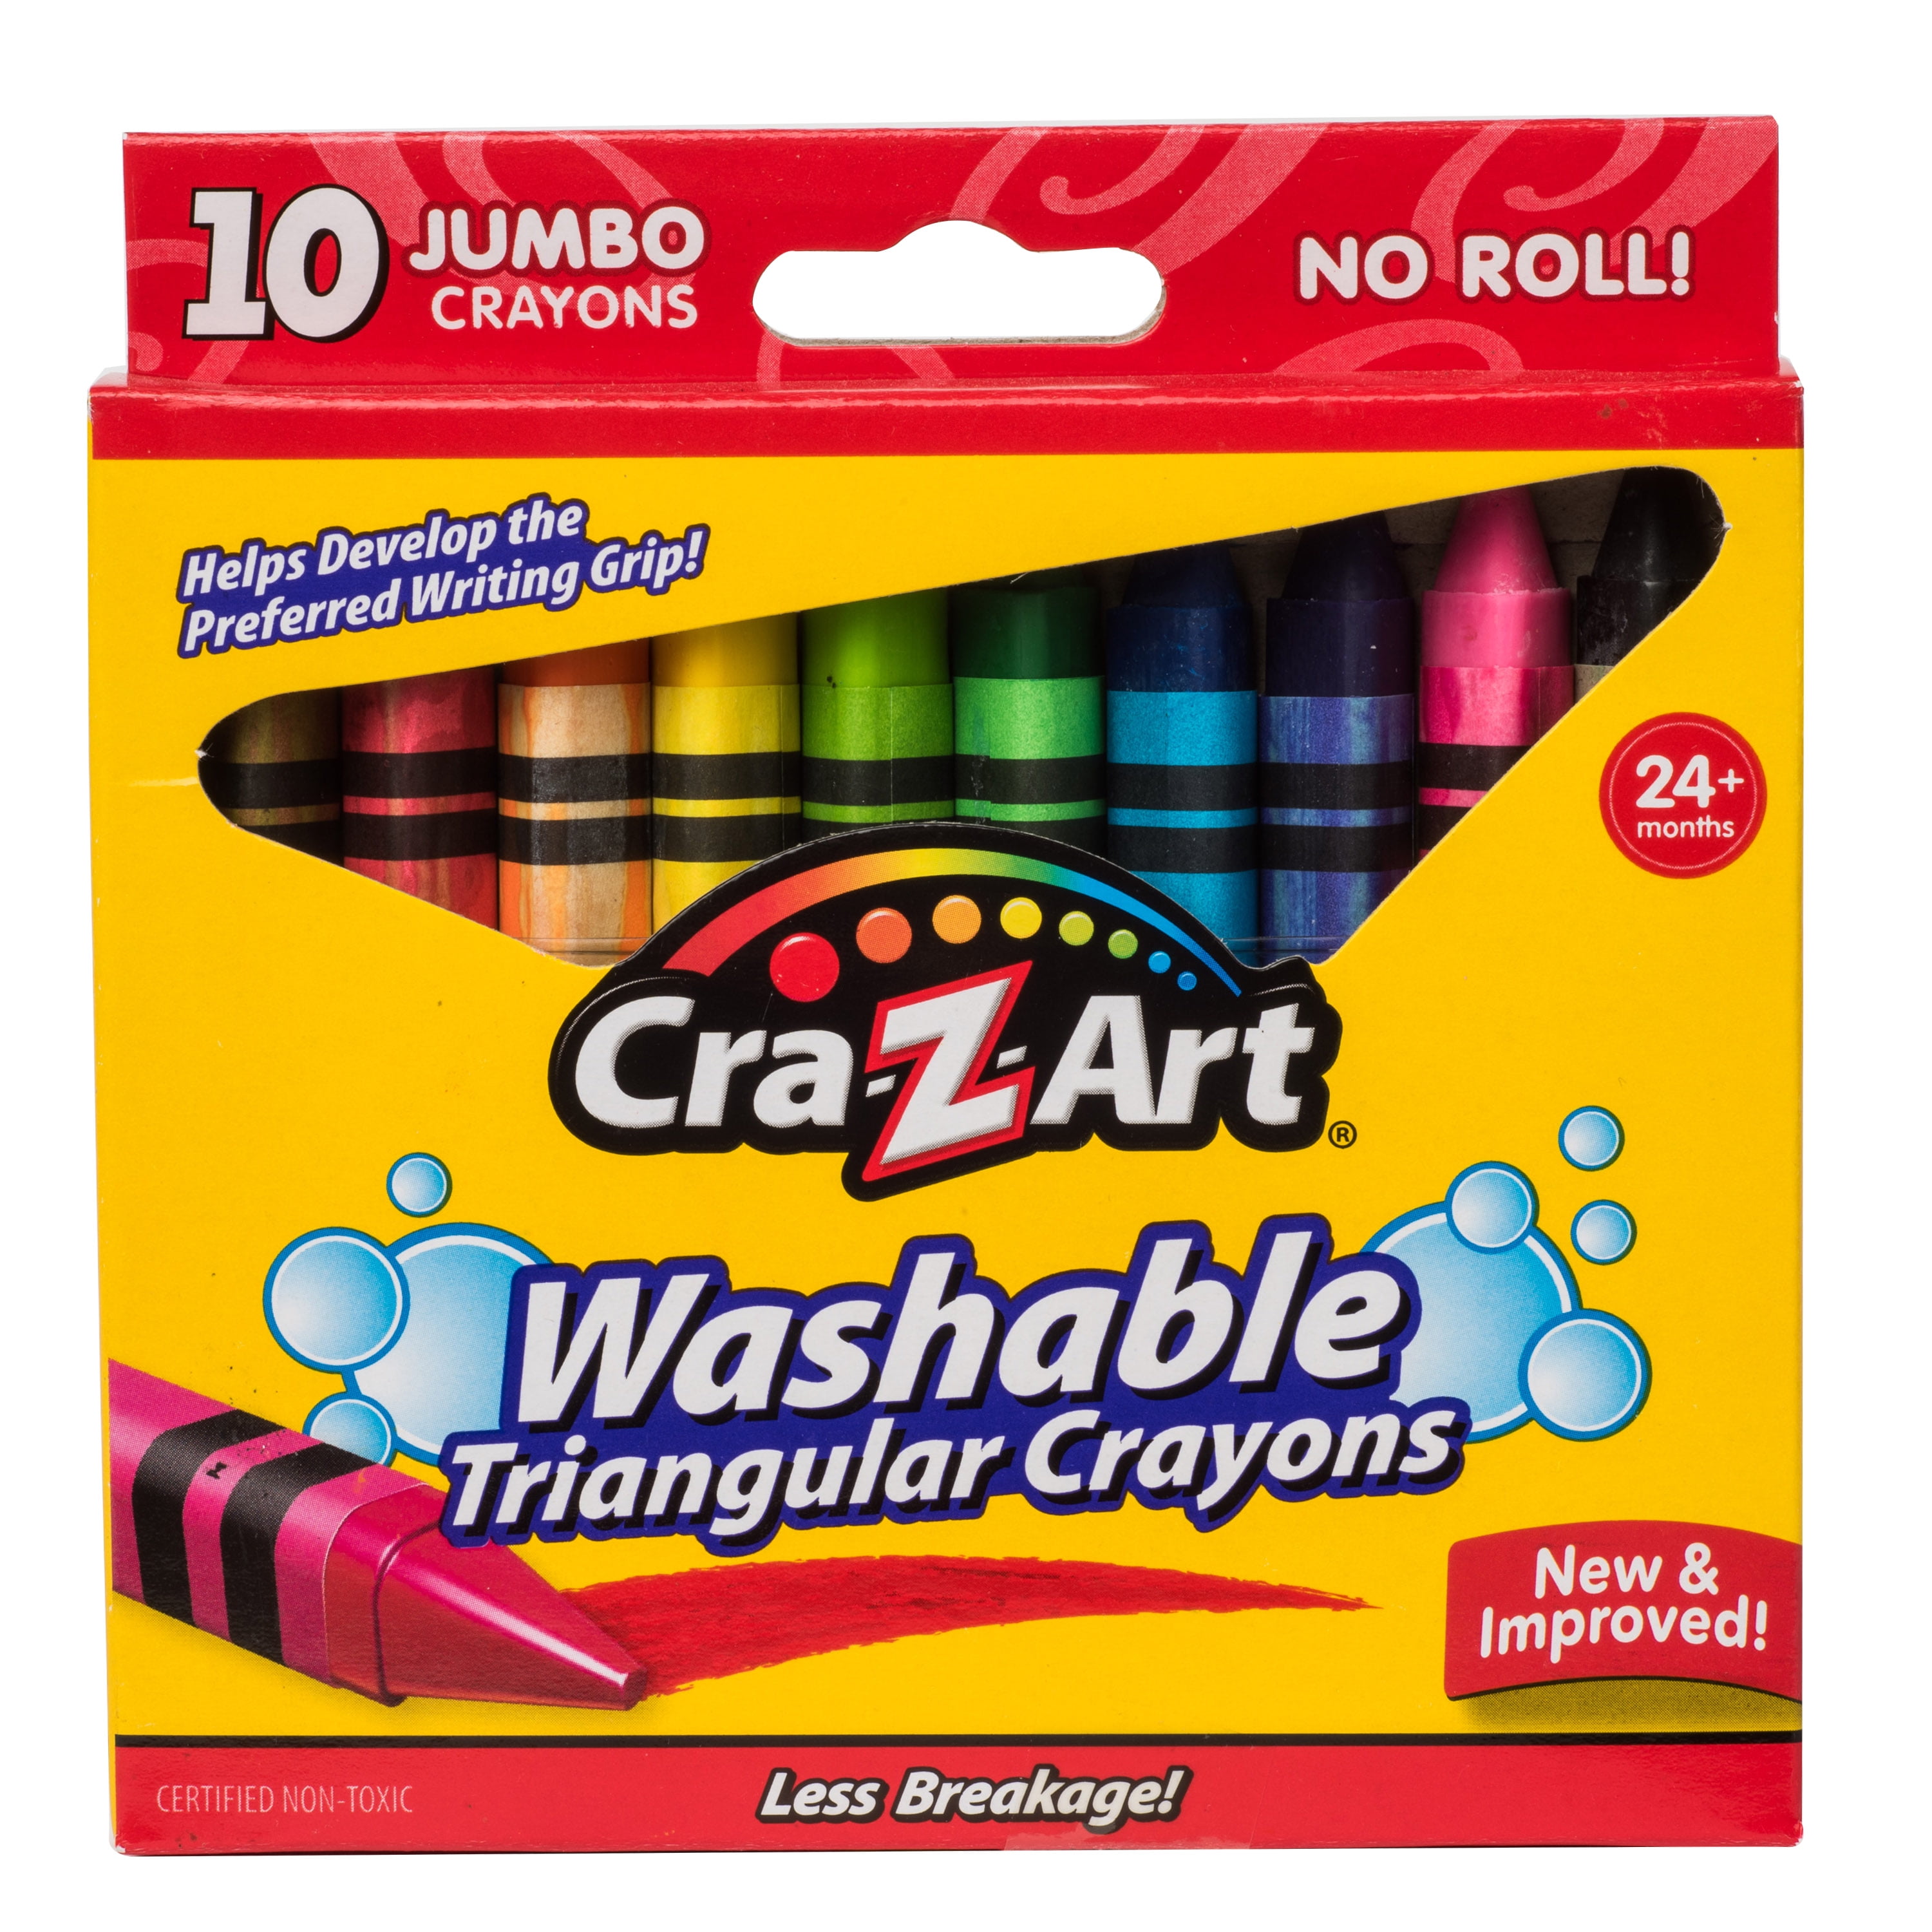 Cra-Z-Art Washable Triangular Jumbo Crayons, 10 Count